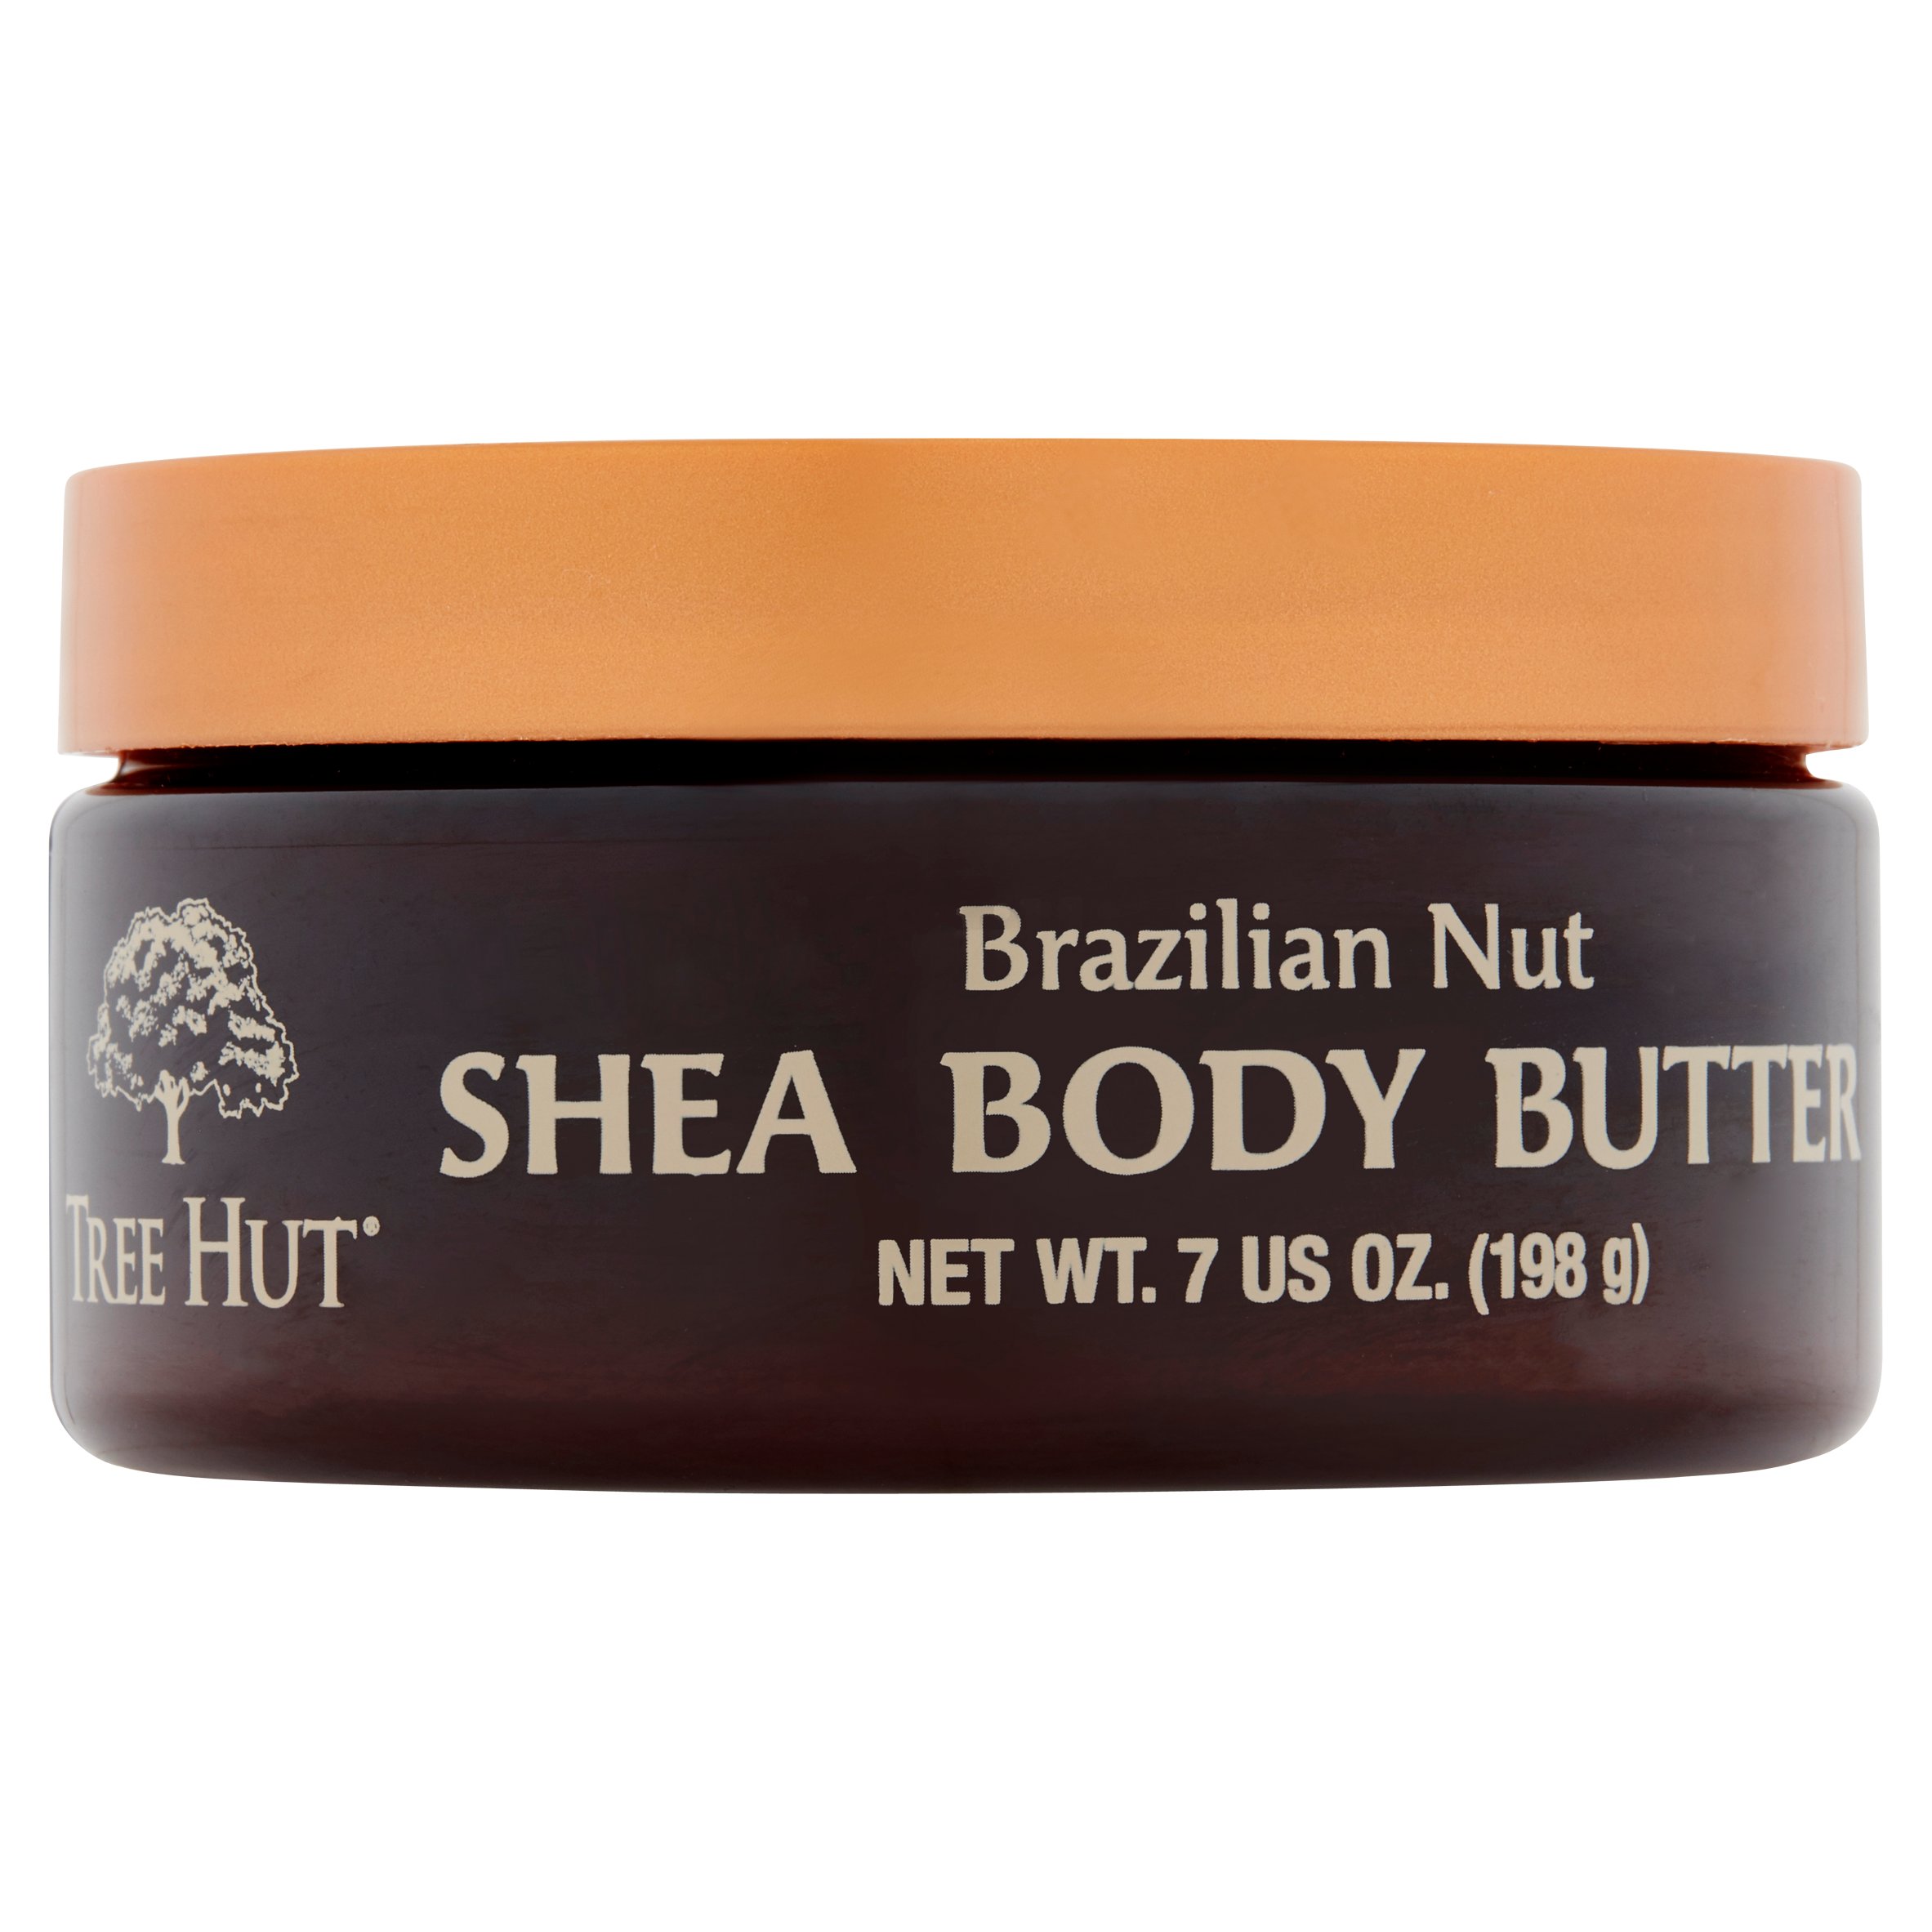 Tree Hut Shea Brazilian Nut Body Butter, 7 oz - image 1 of 4